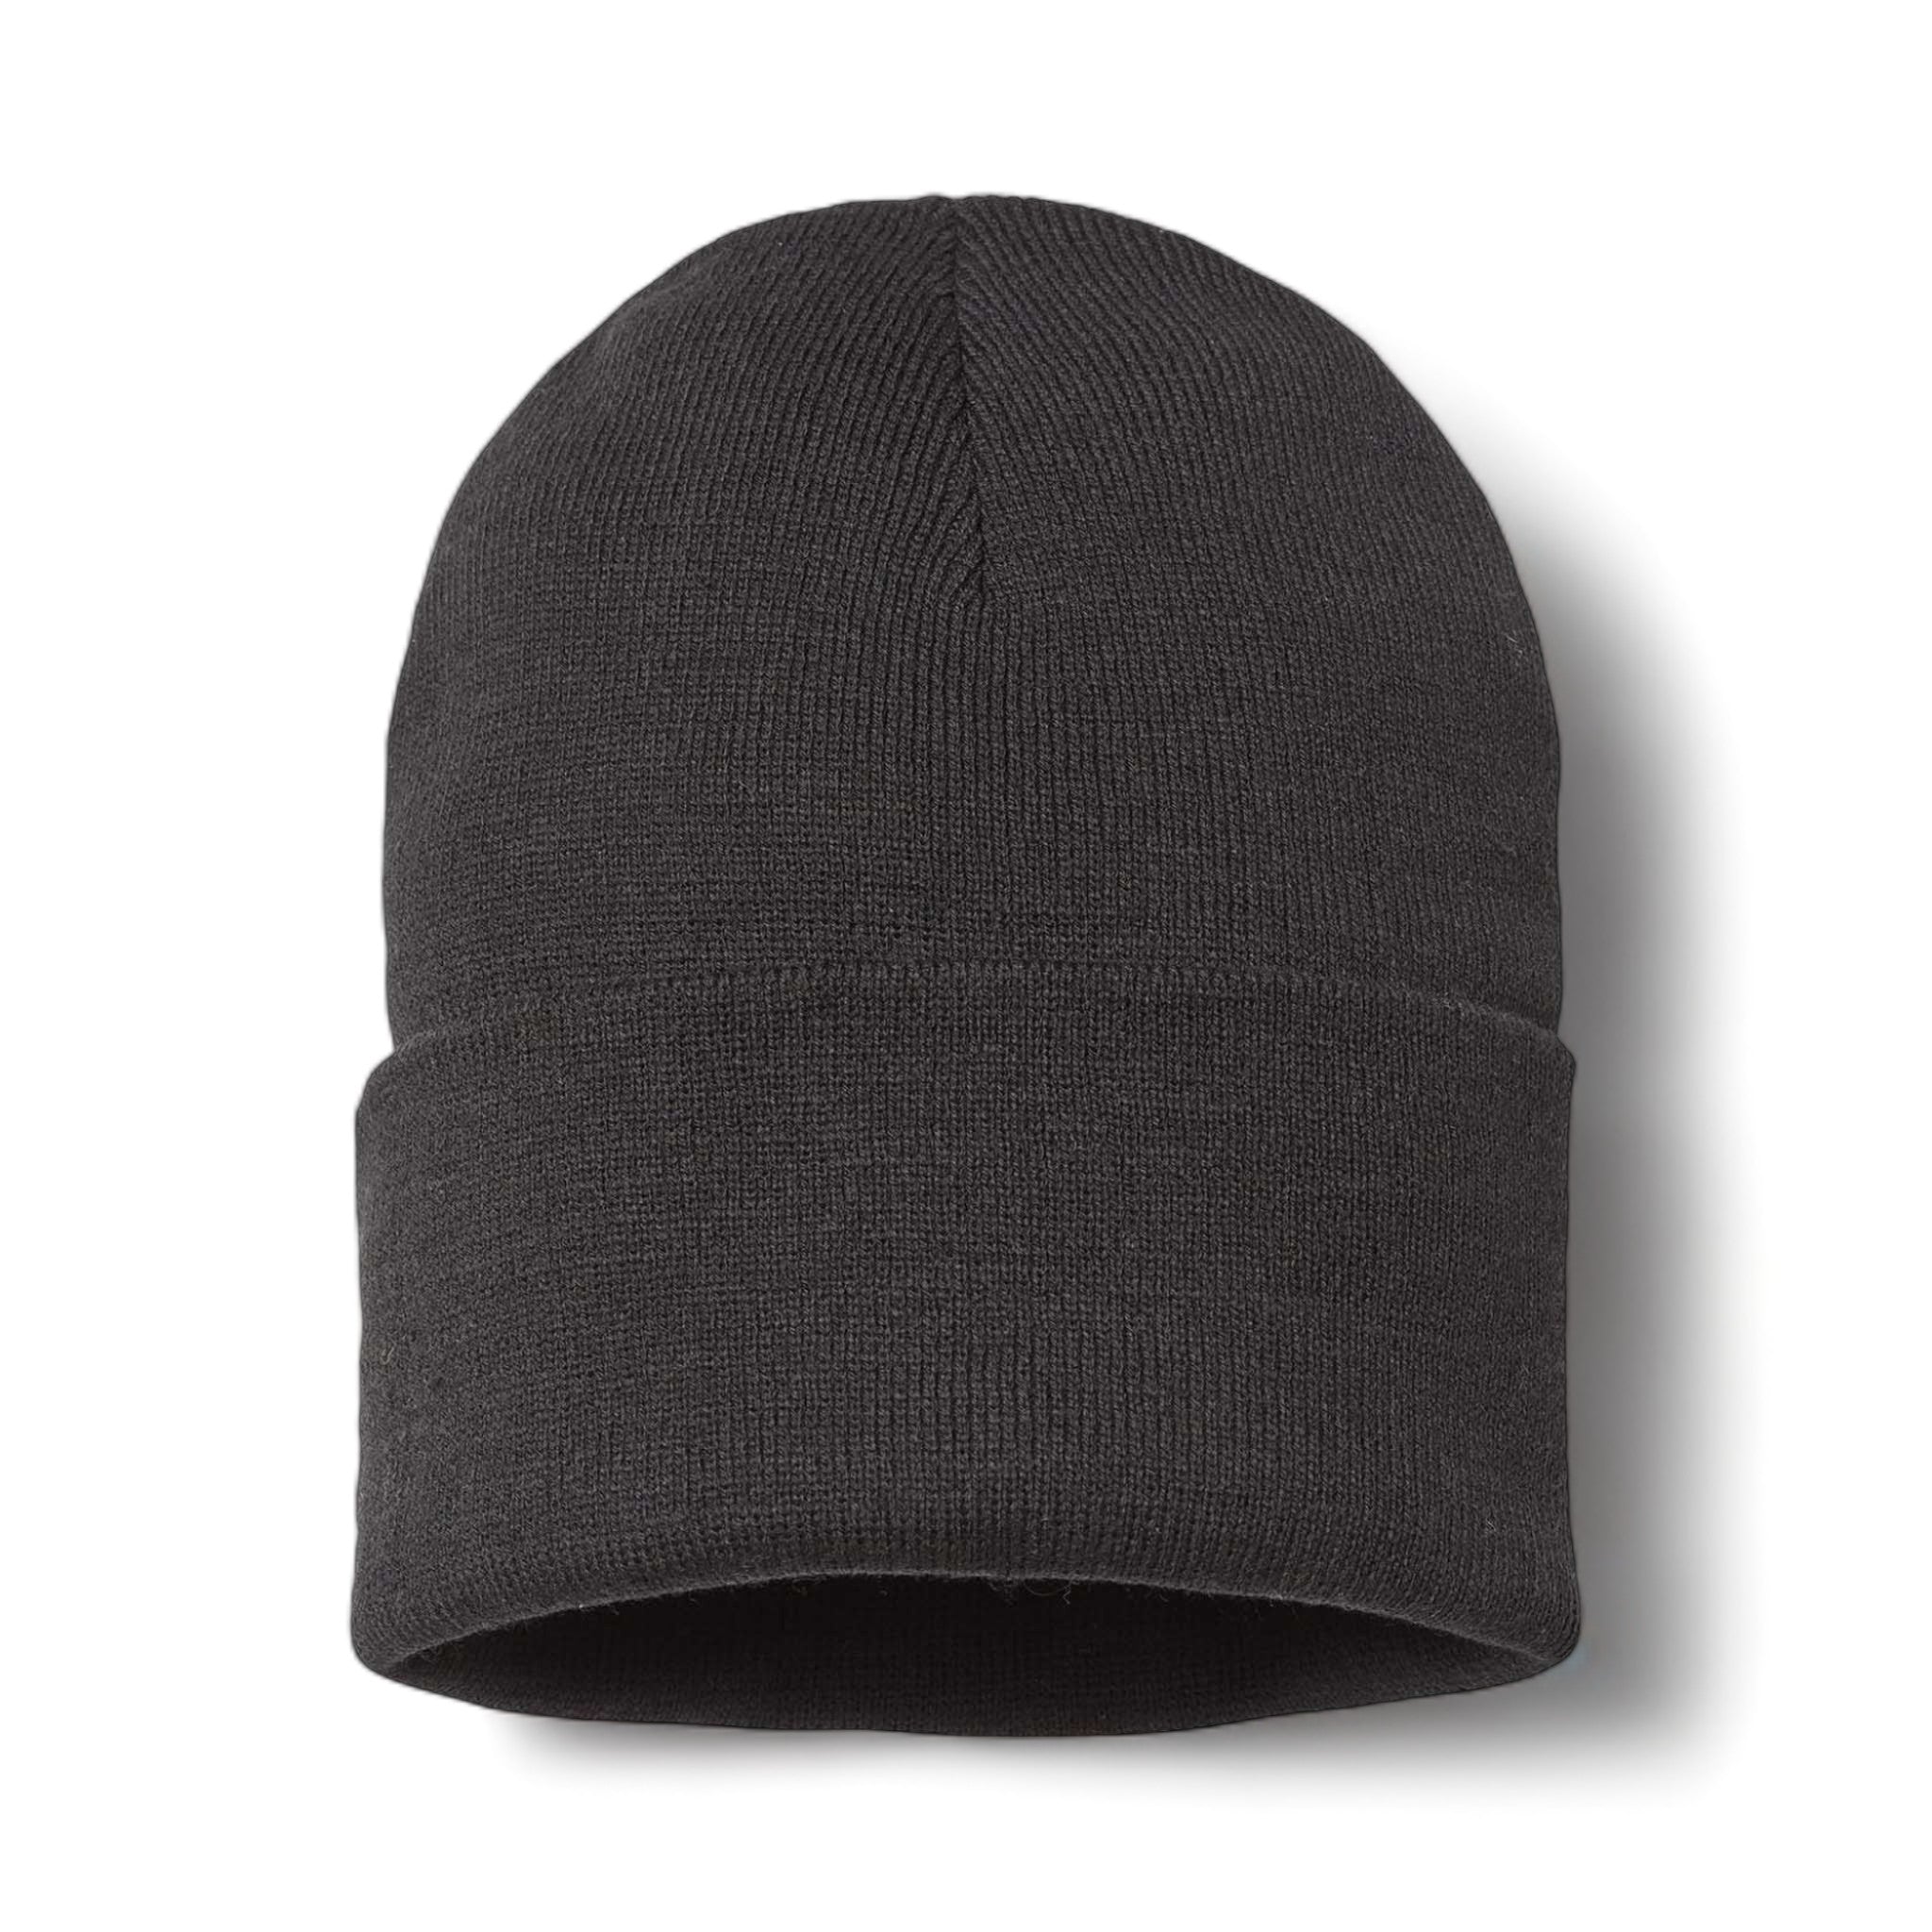 Front view of Atlantis Headwear PURE custom hat in black